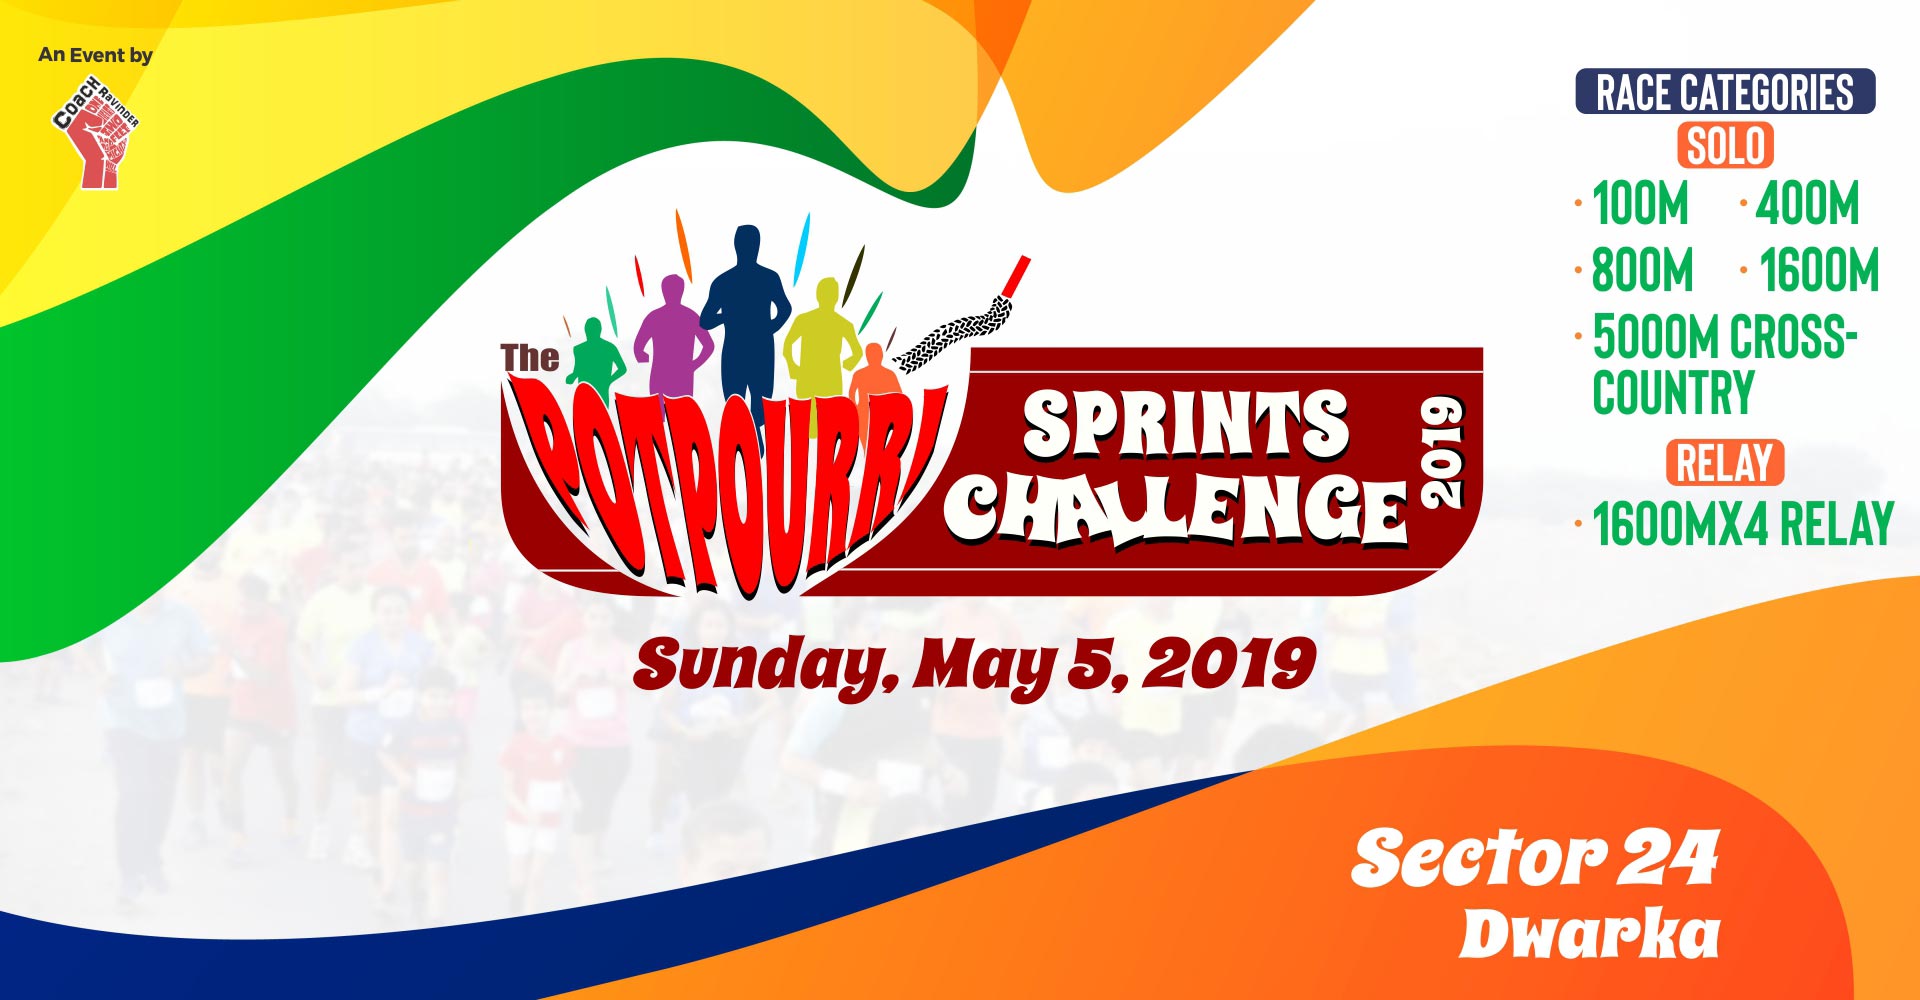 Potpourri Sprints Challenge 2019, Sunday, 5 May 2019, Sector 23B - Dwarka Delhi, Coach Ravinder Gurugram